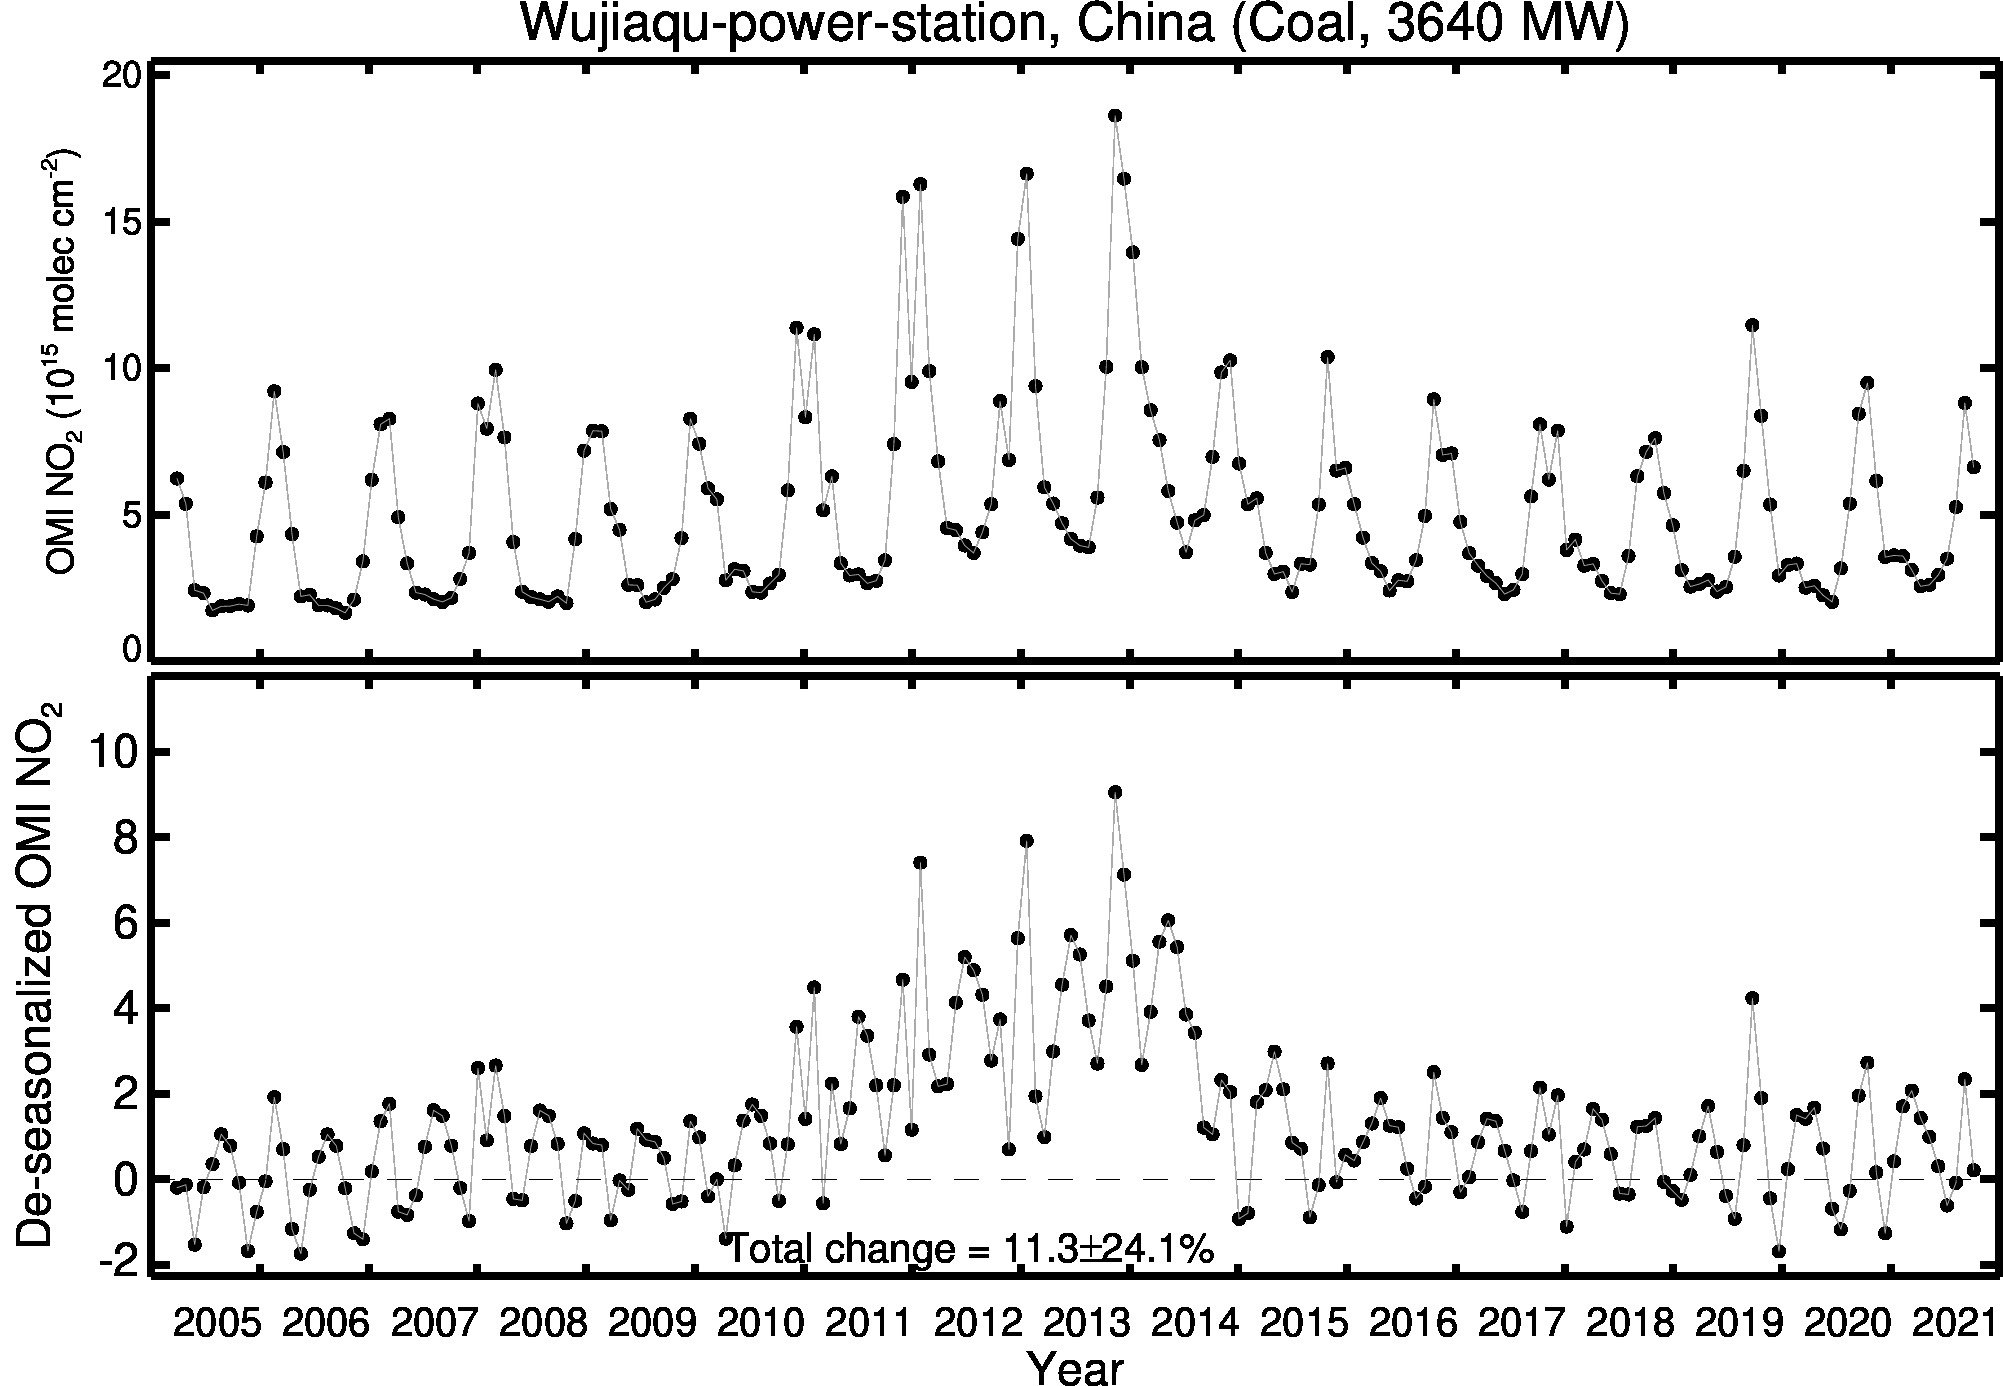 Wujiaqu power station Line Plot 2005-2021